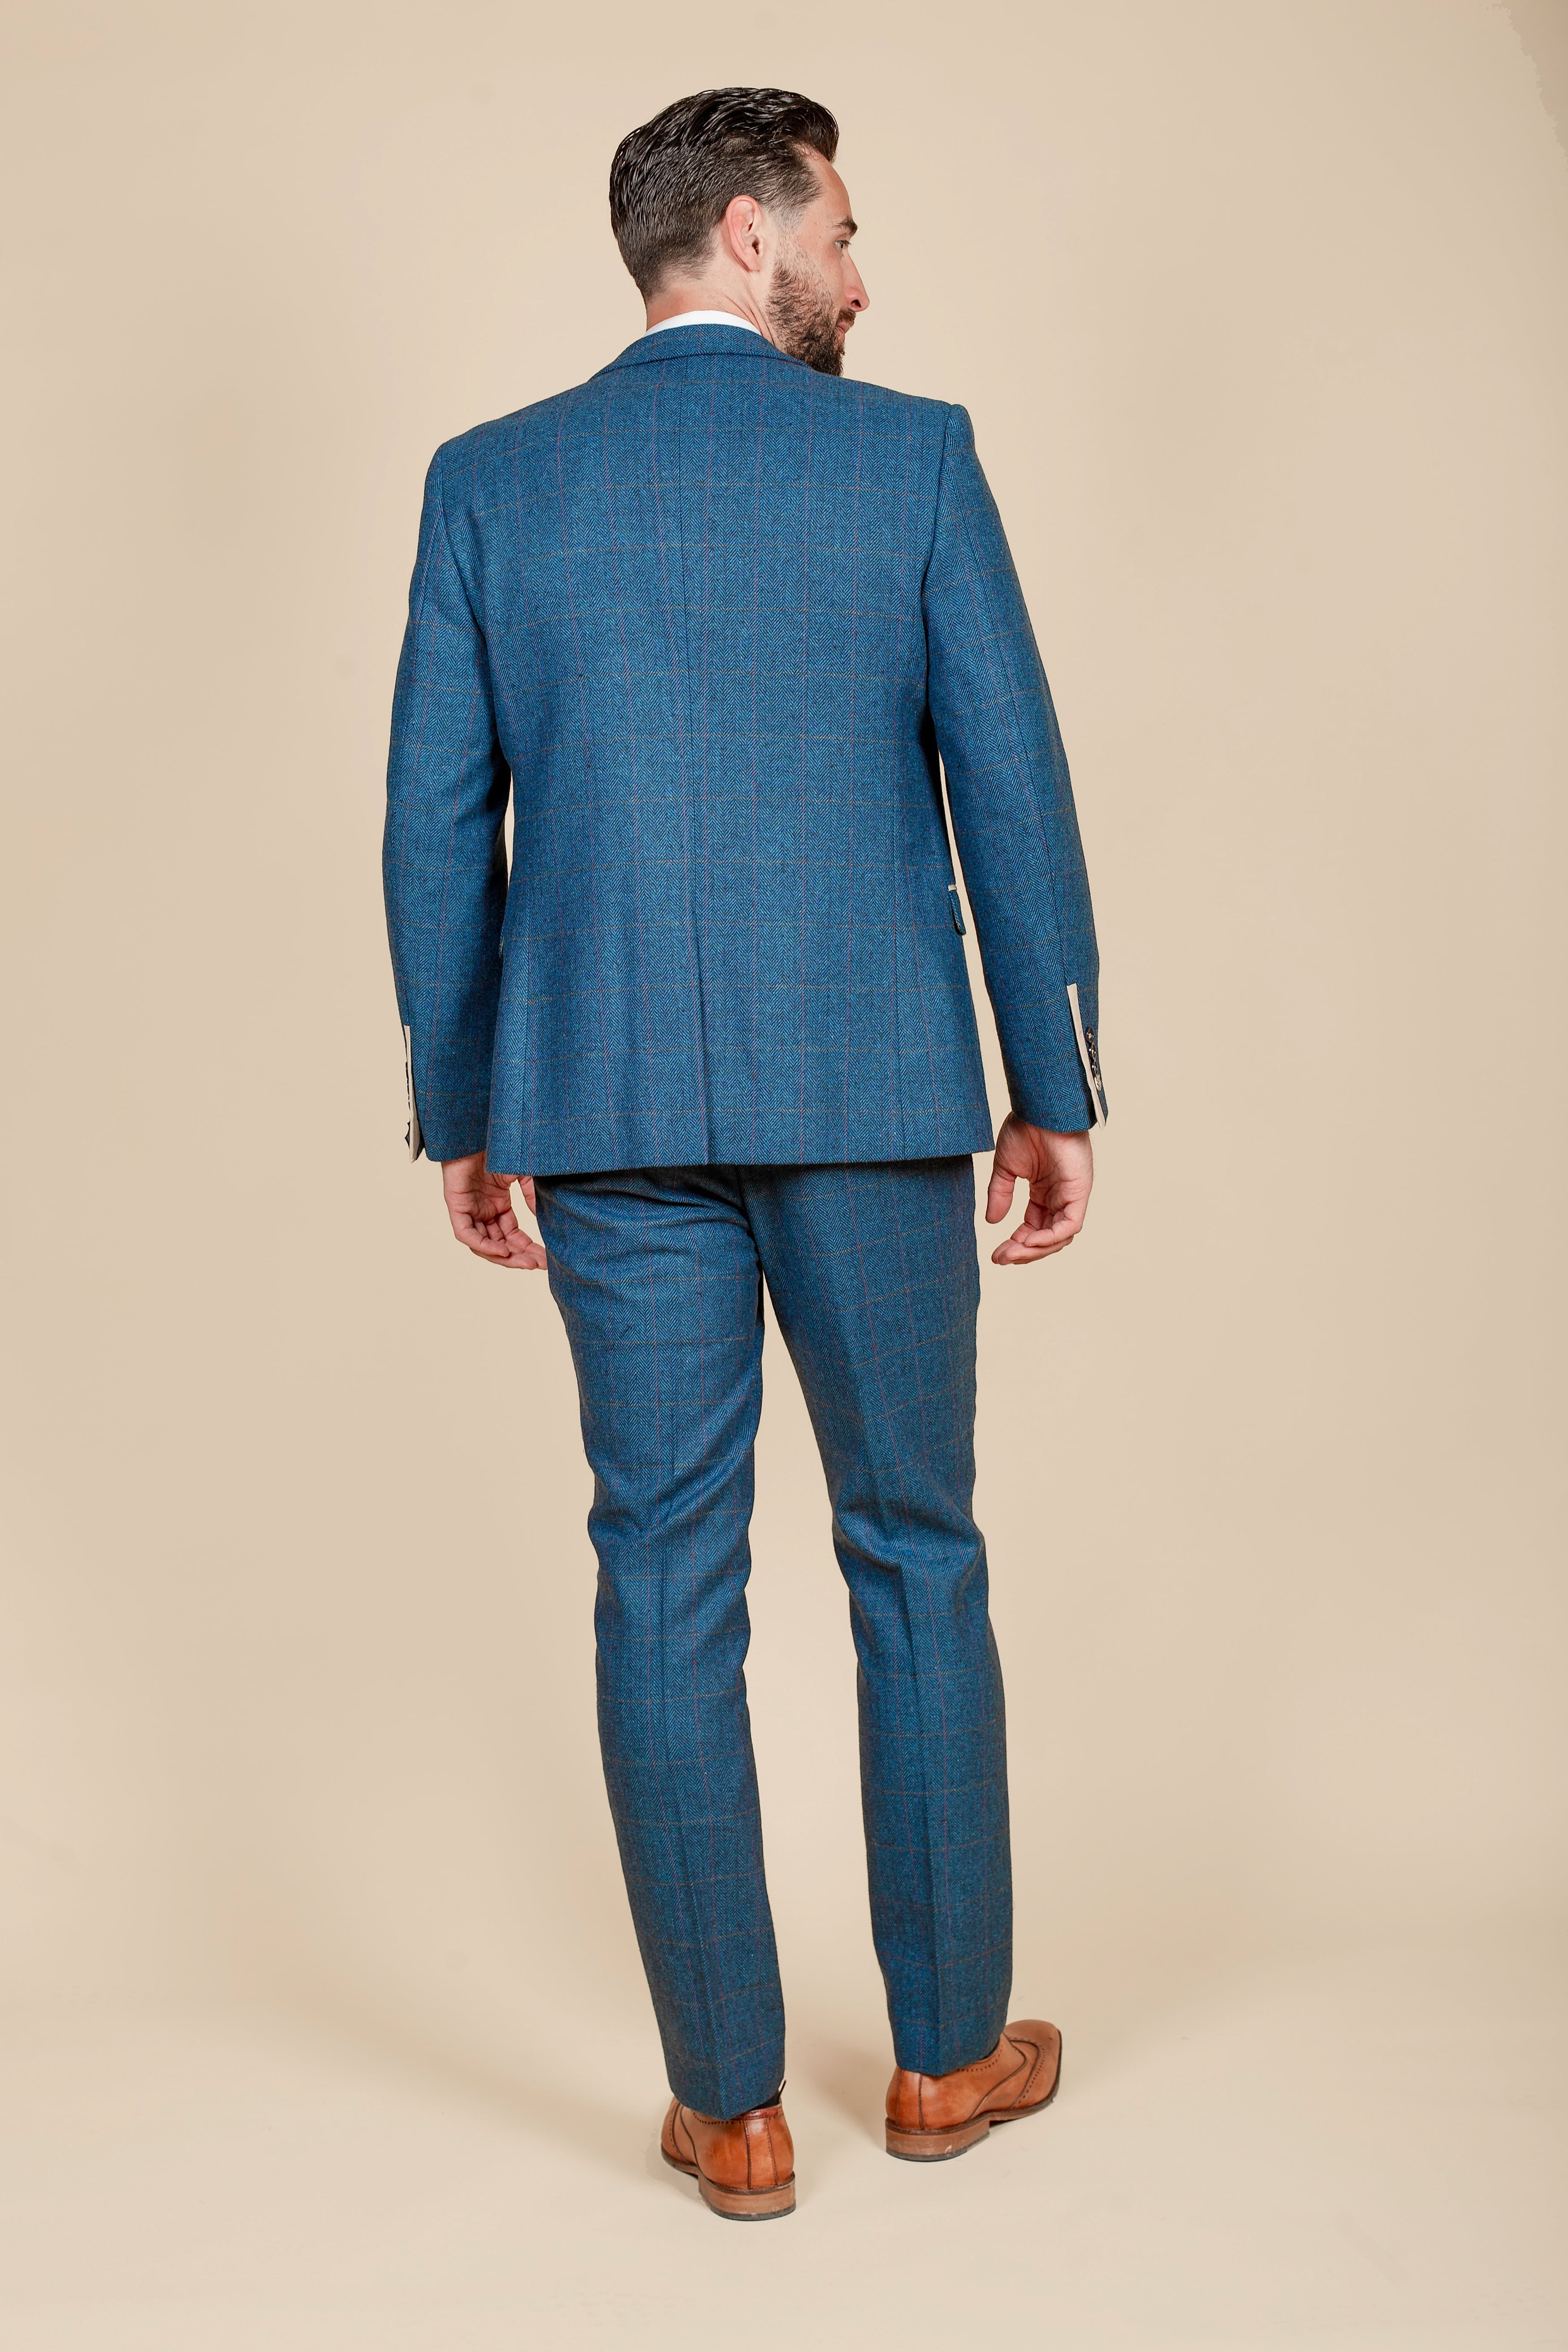 DION - Blue Tweed Check Three Piece Suit-SUITS-marcdarcy-Marc Darcy